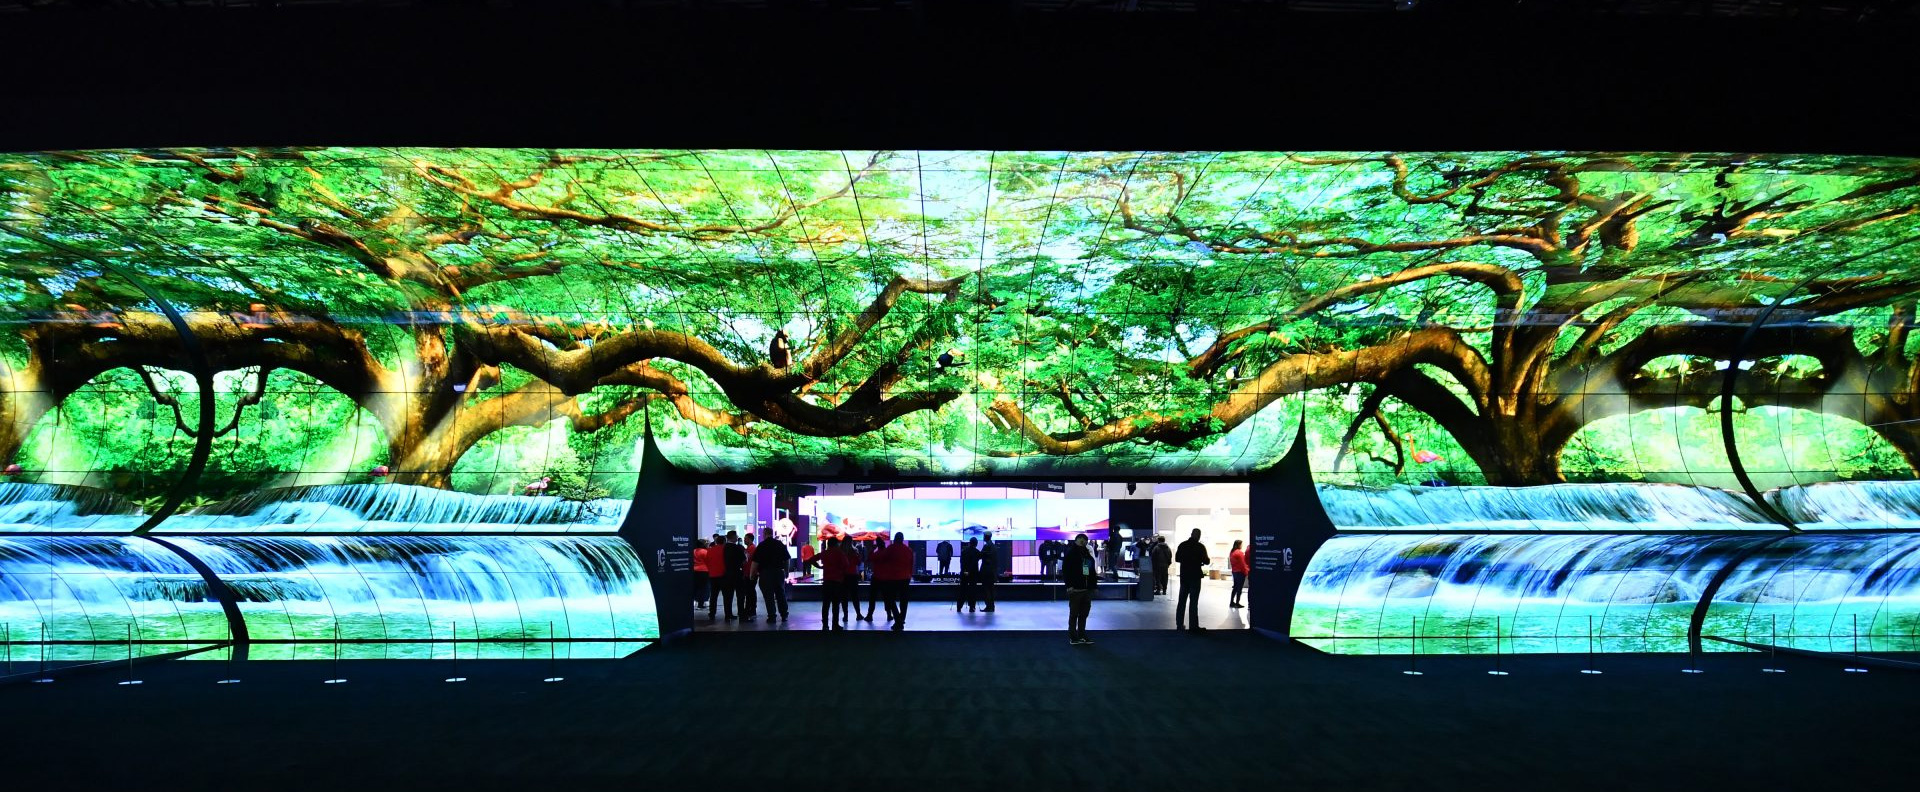 LG OLED Horizon: a 6 meters high and 25 meters wide screen